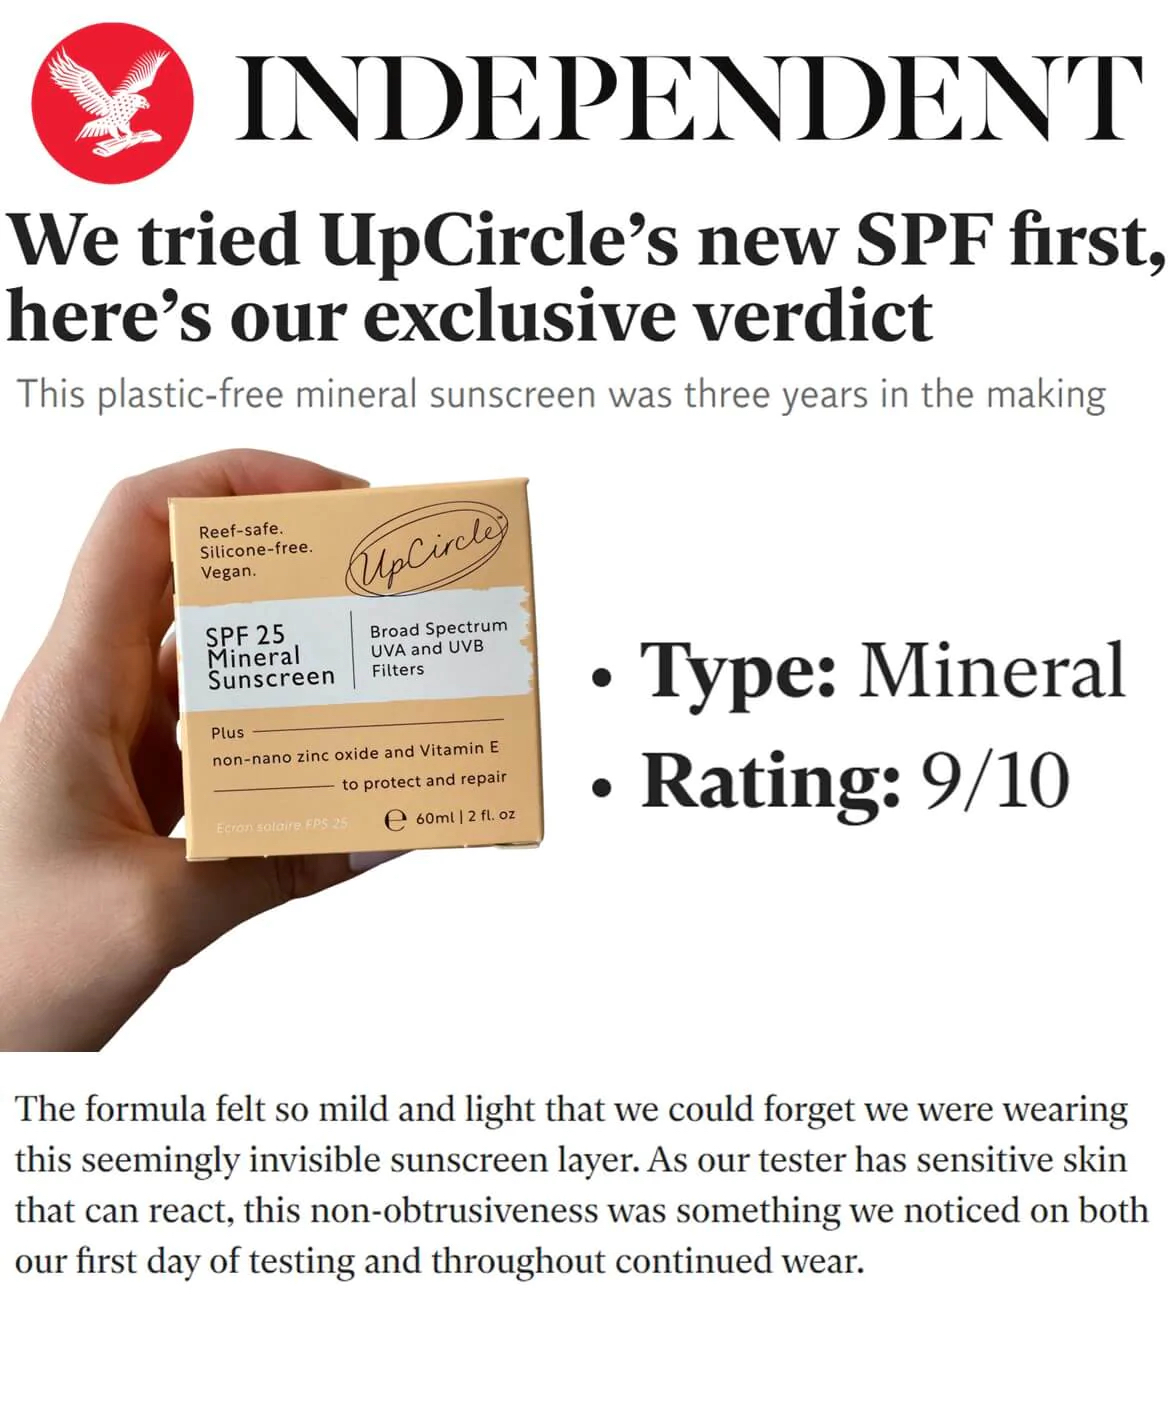 SPF 25 Mineral Sunscreen